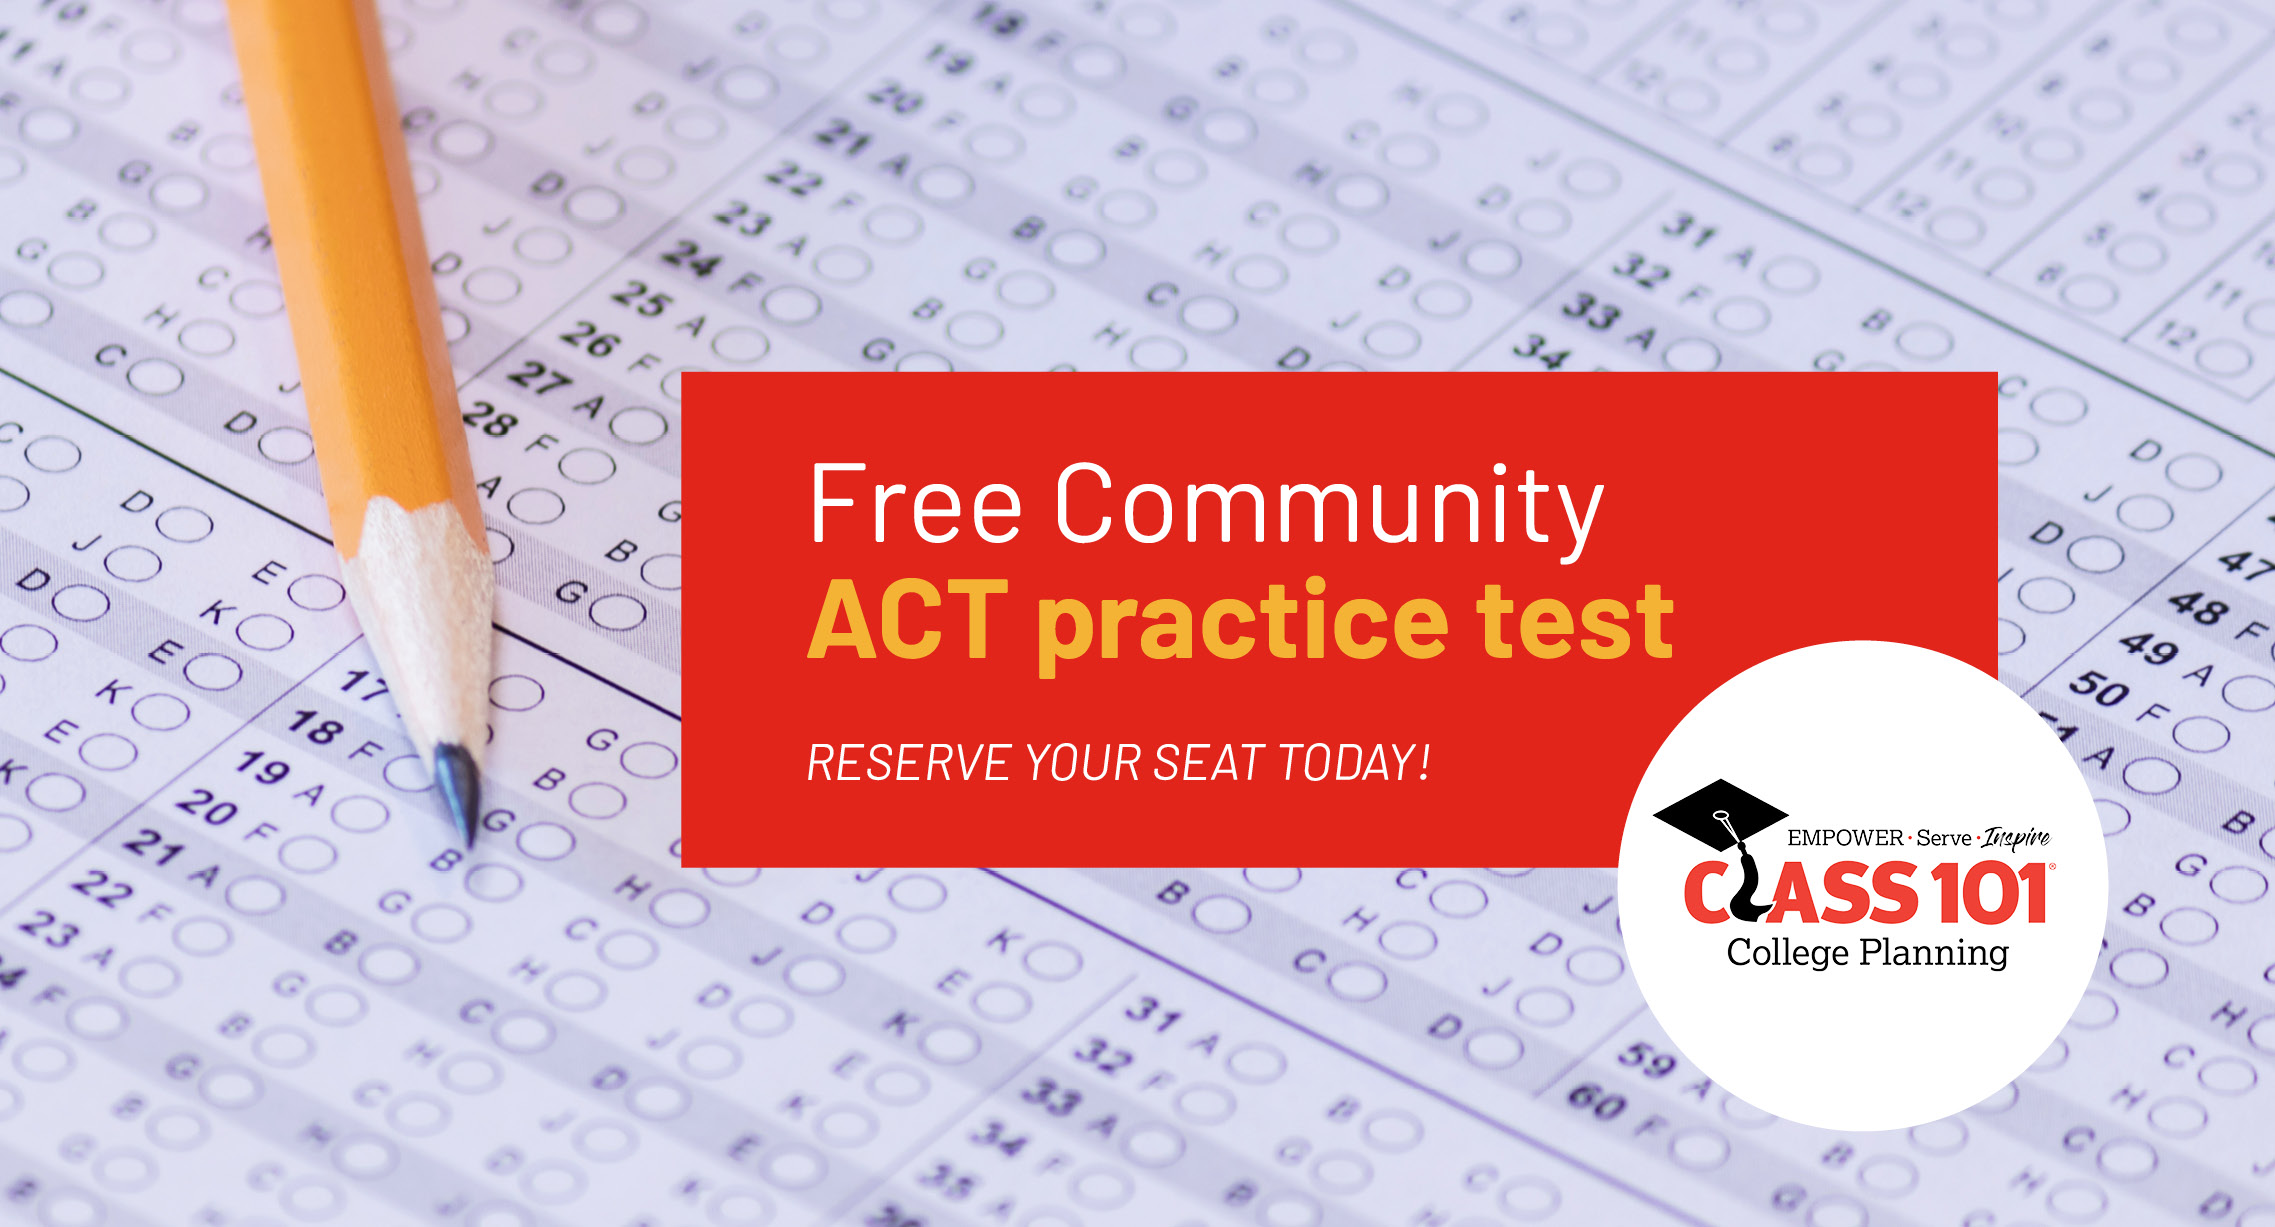 FREE ACT Community Practice test